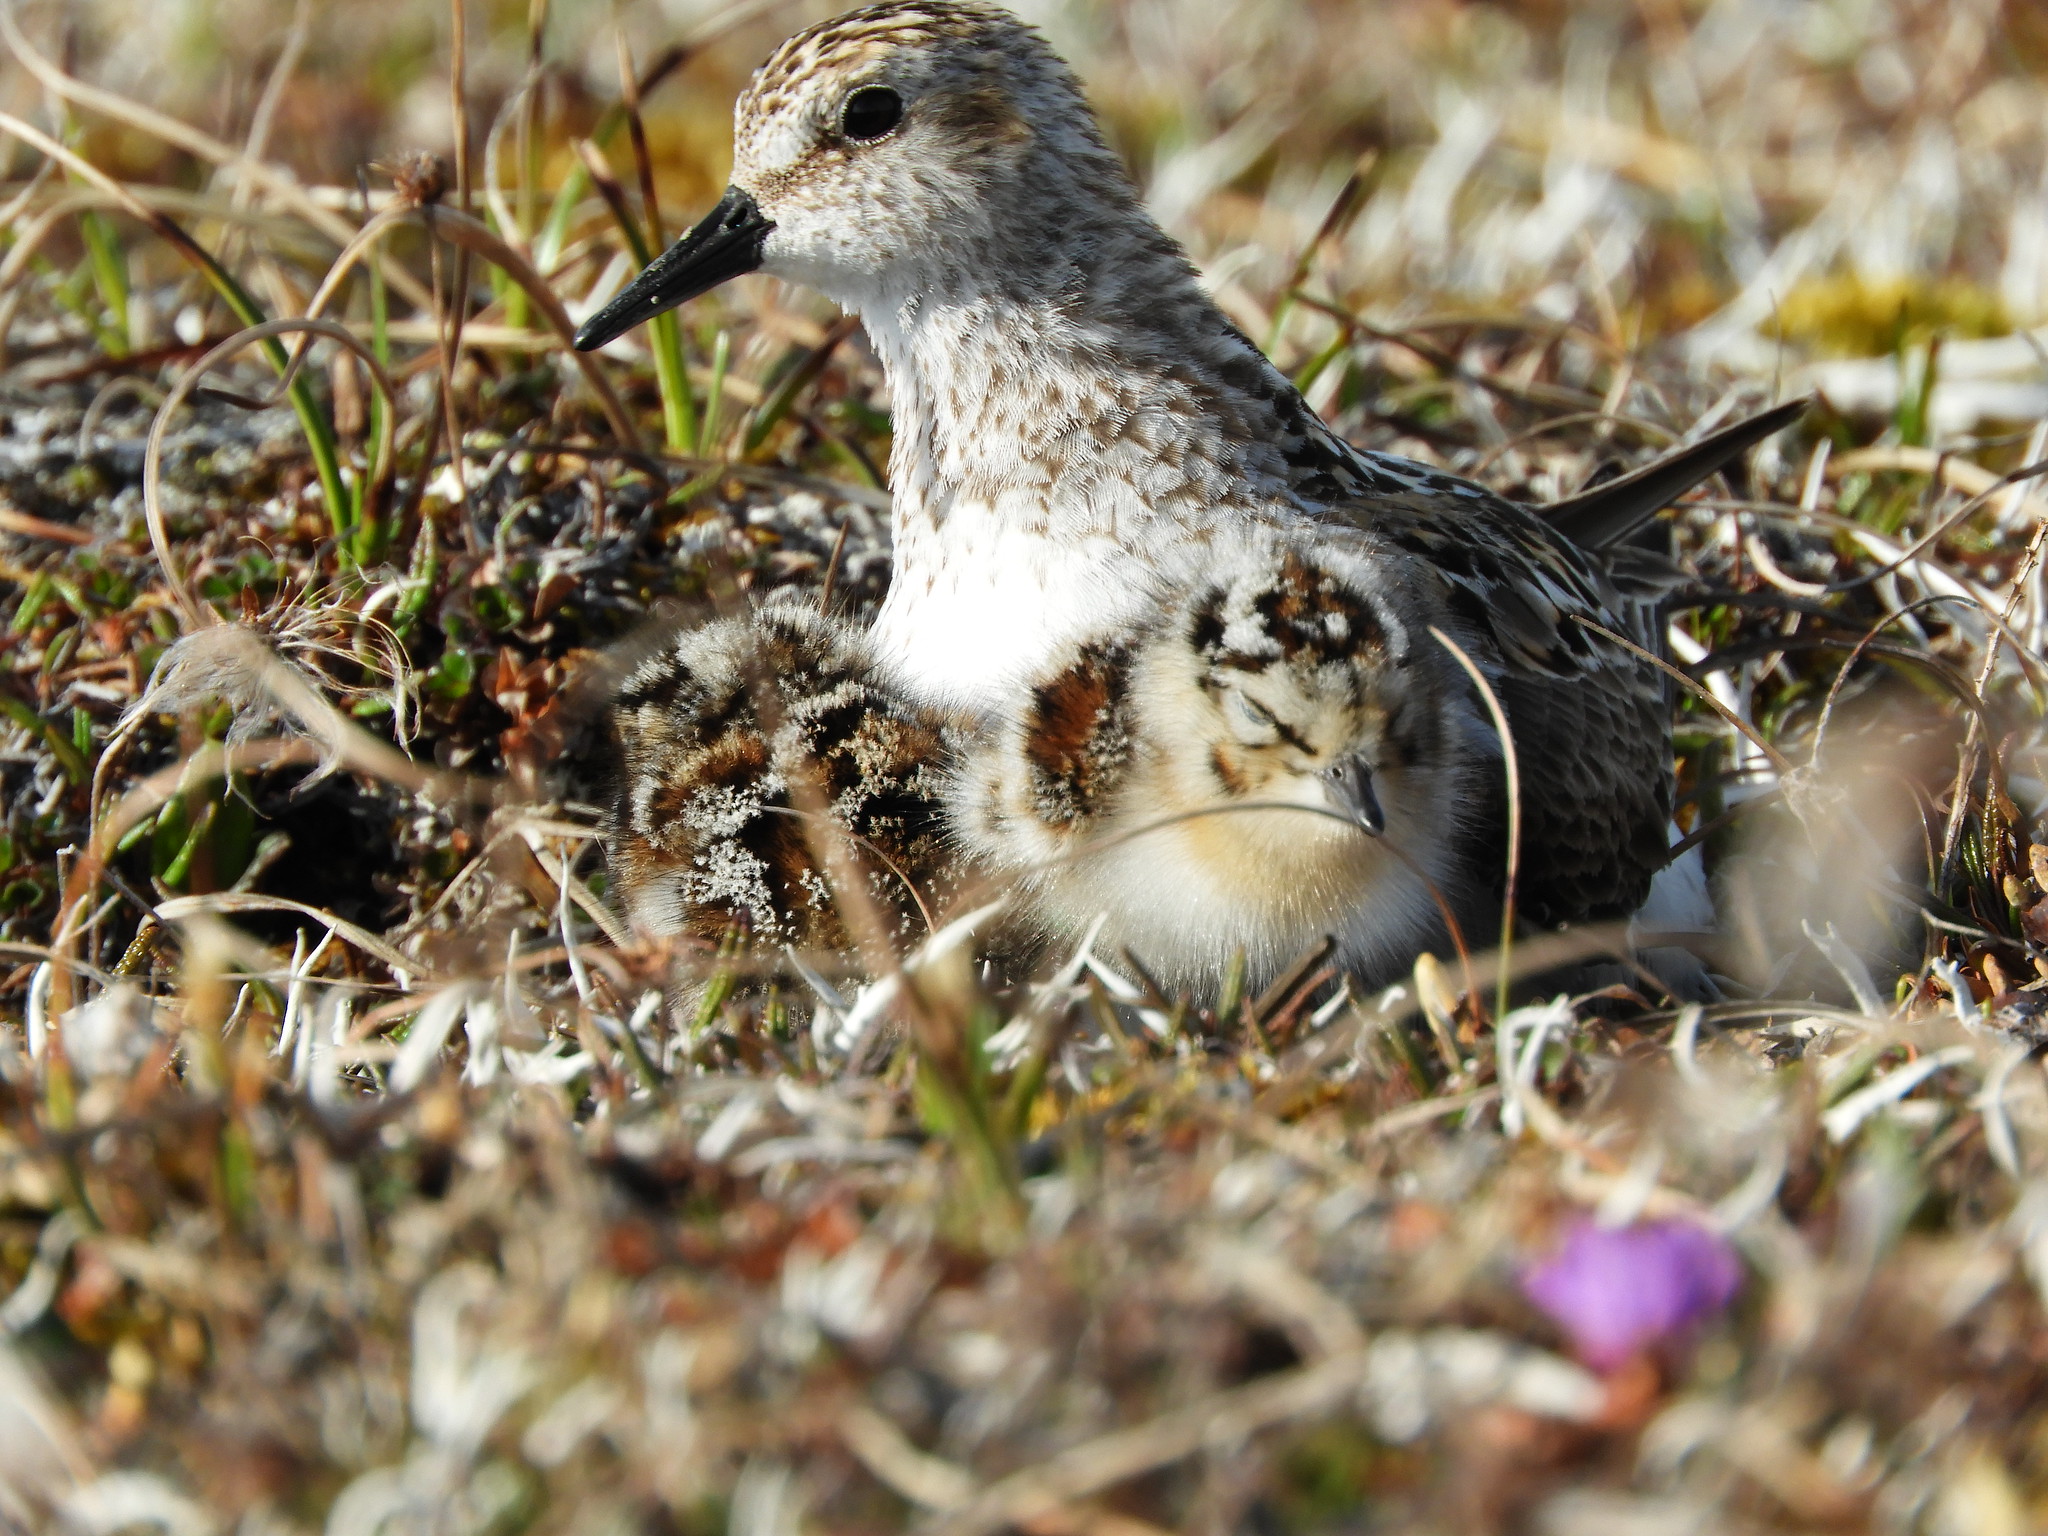 Semipalmated sandpiper and chicks in arctic grasses.